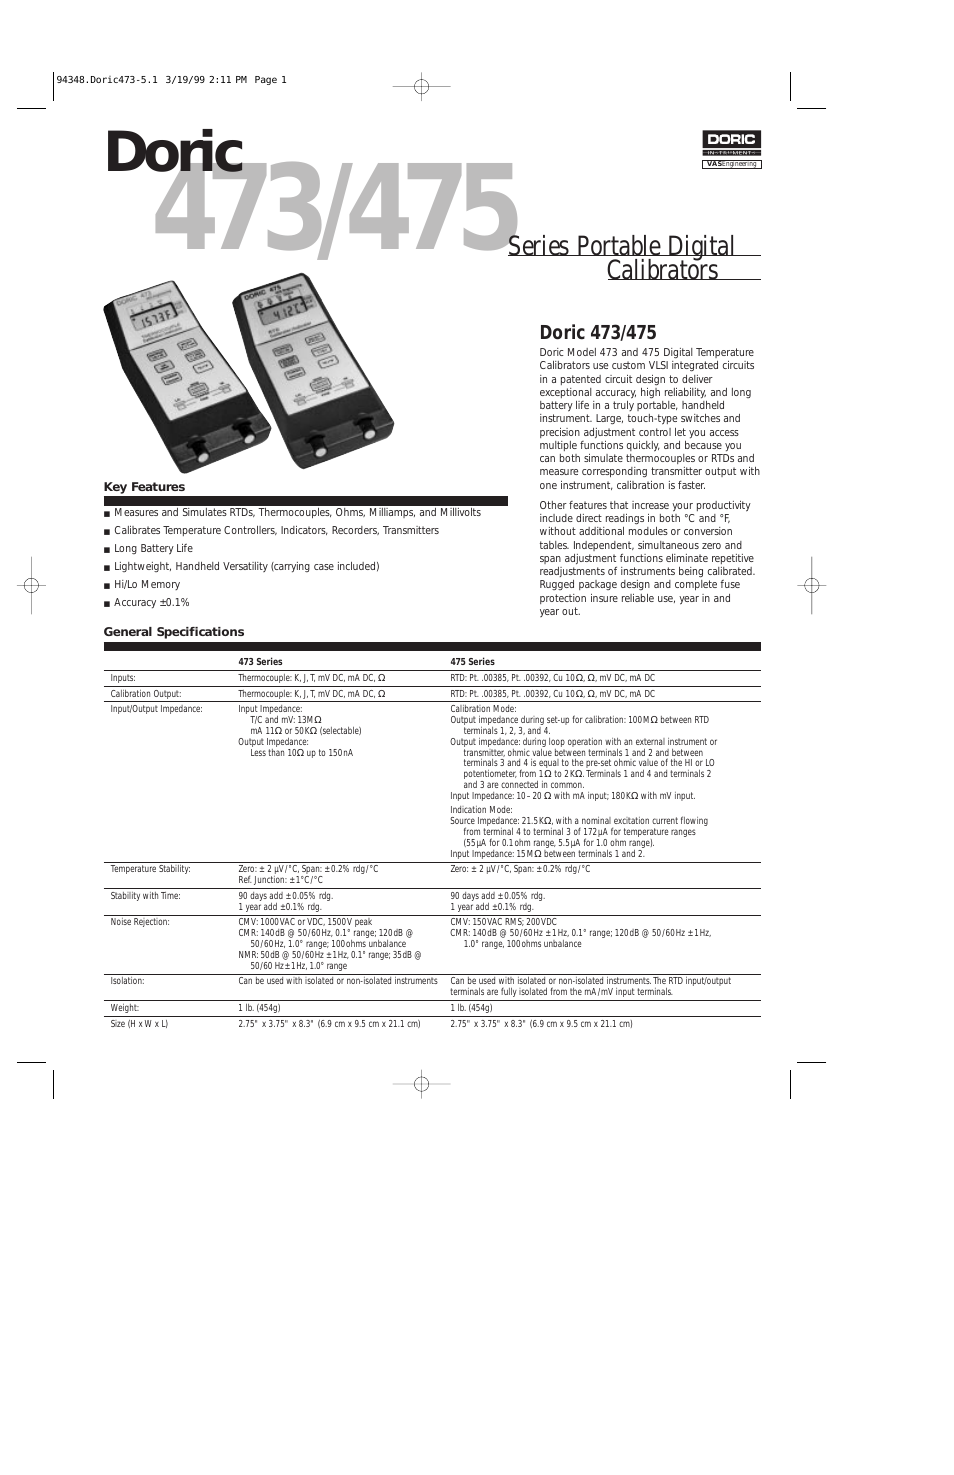 475 Series Portable Digital Calibrators